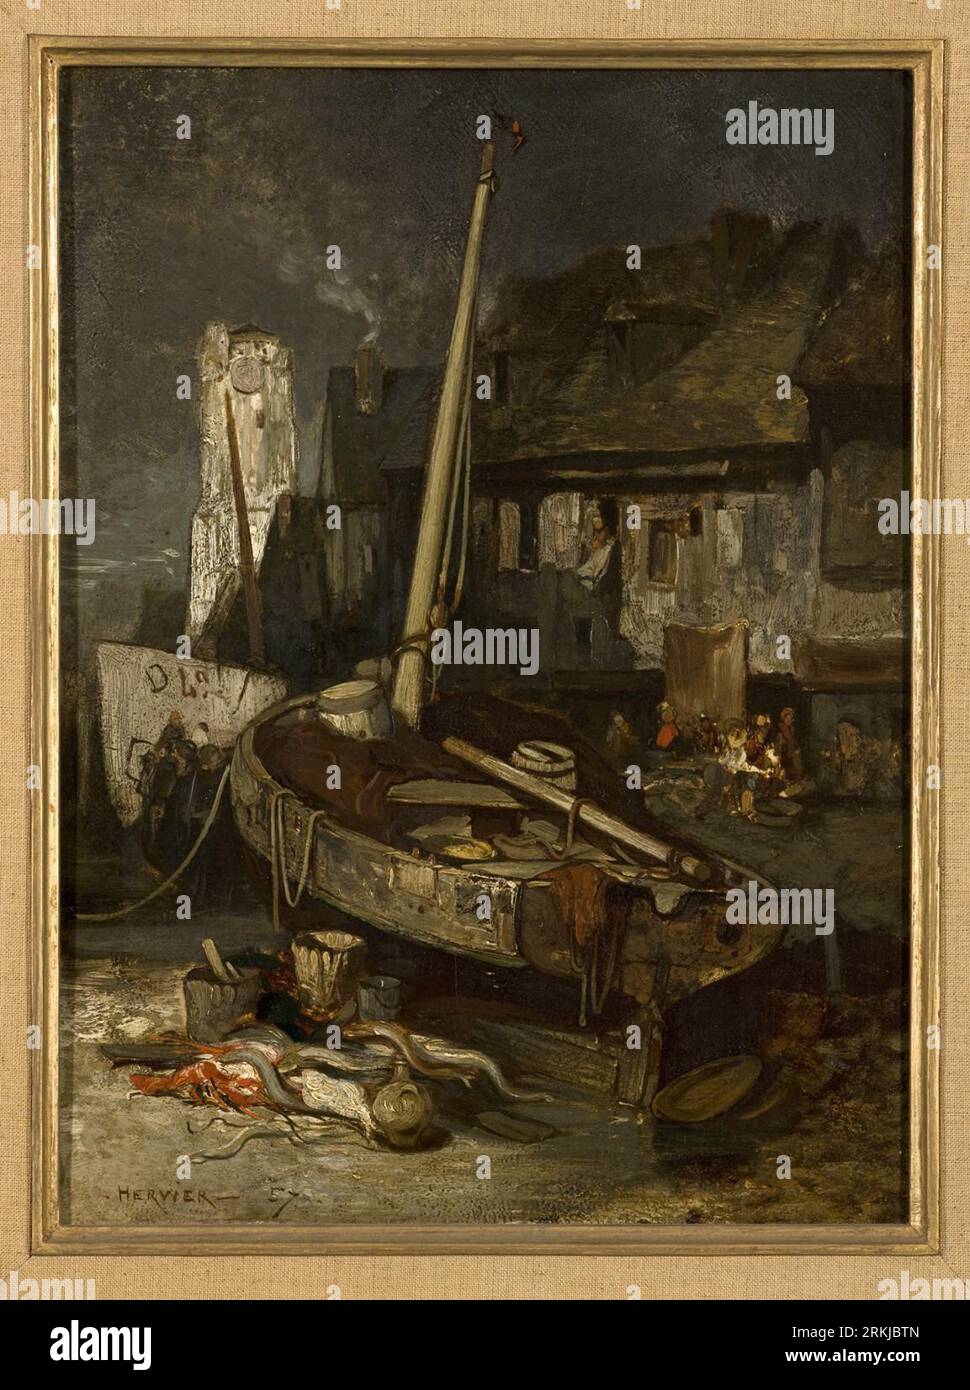 La barque échoué 1857 by Adolphe Hervier Stock Photo